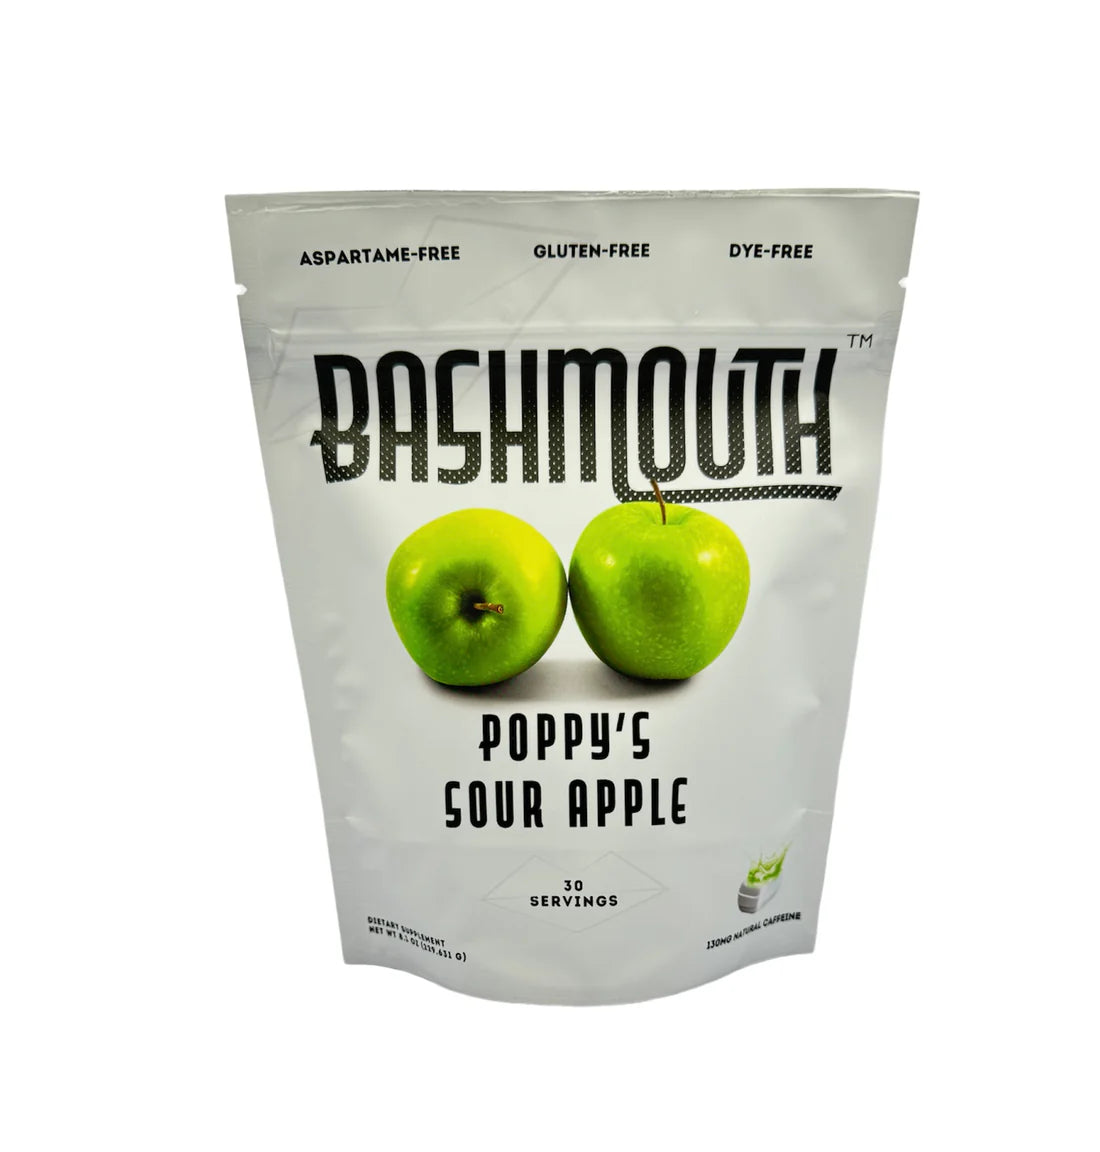 BashMouth Bash Bag 30 Servings (Poppy's Sour Green Apple)